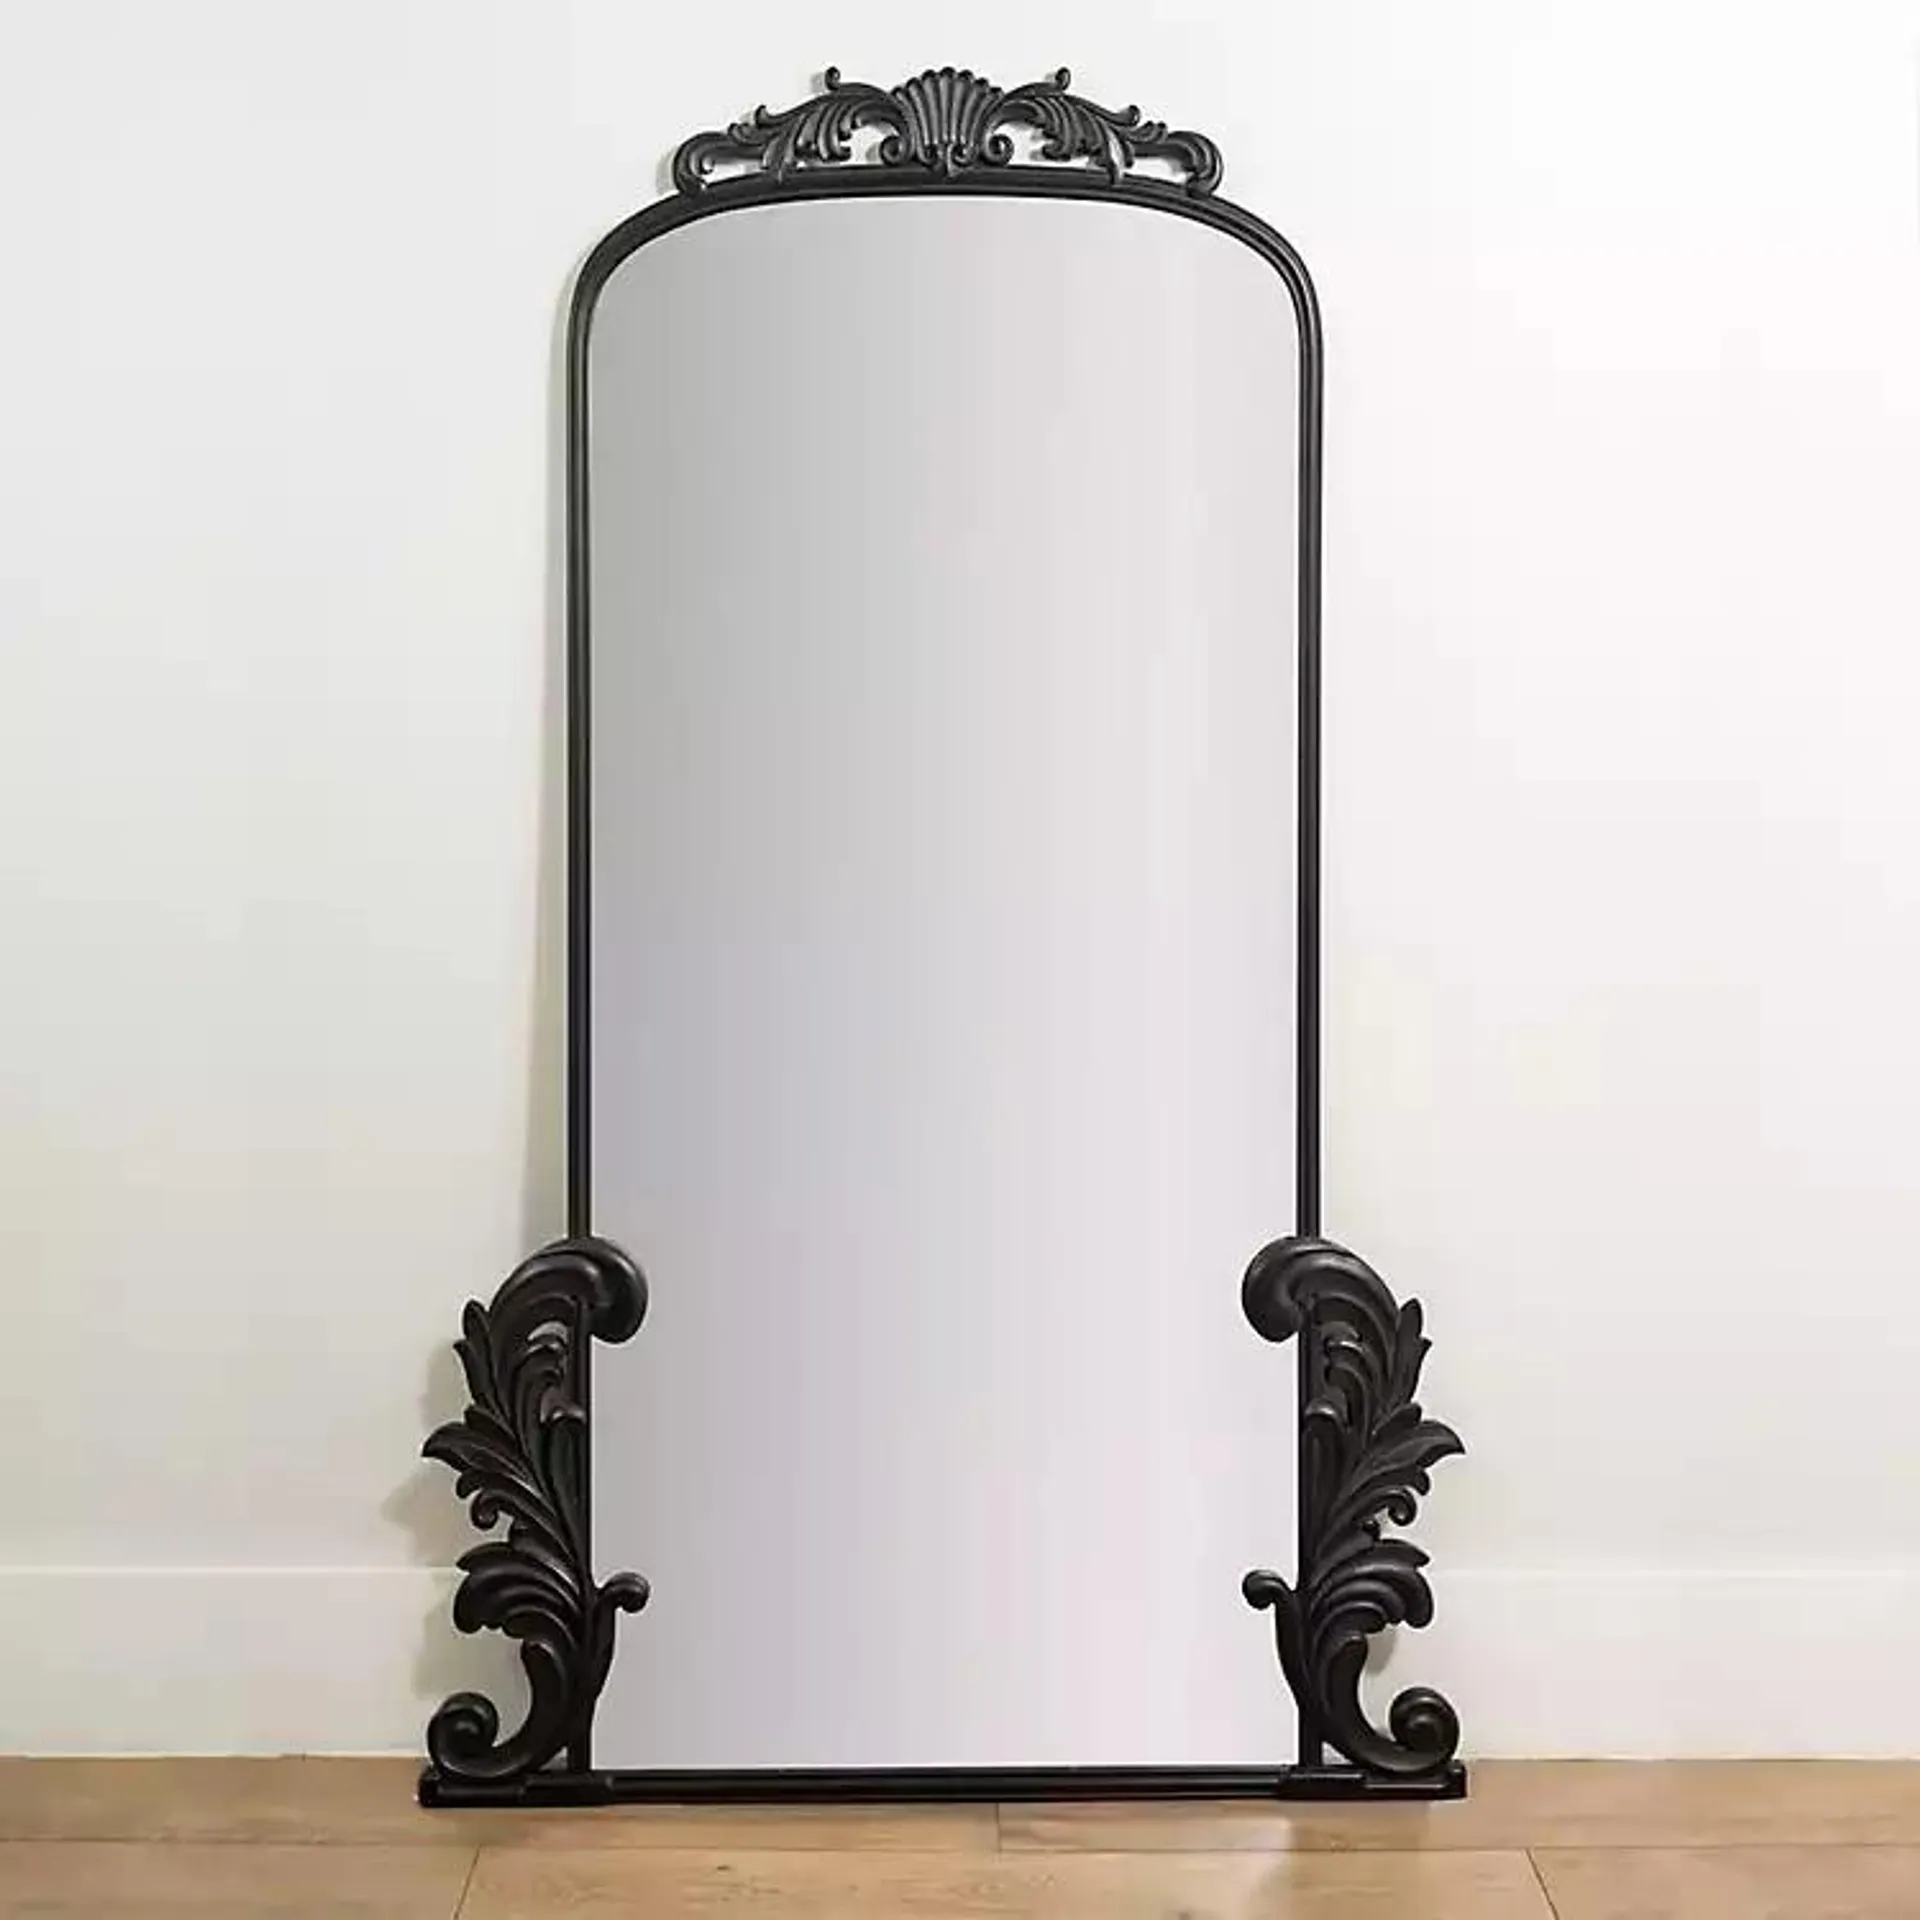 Black Ornate Scroll Bordeaux Wood Mirror